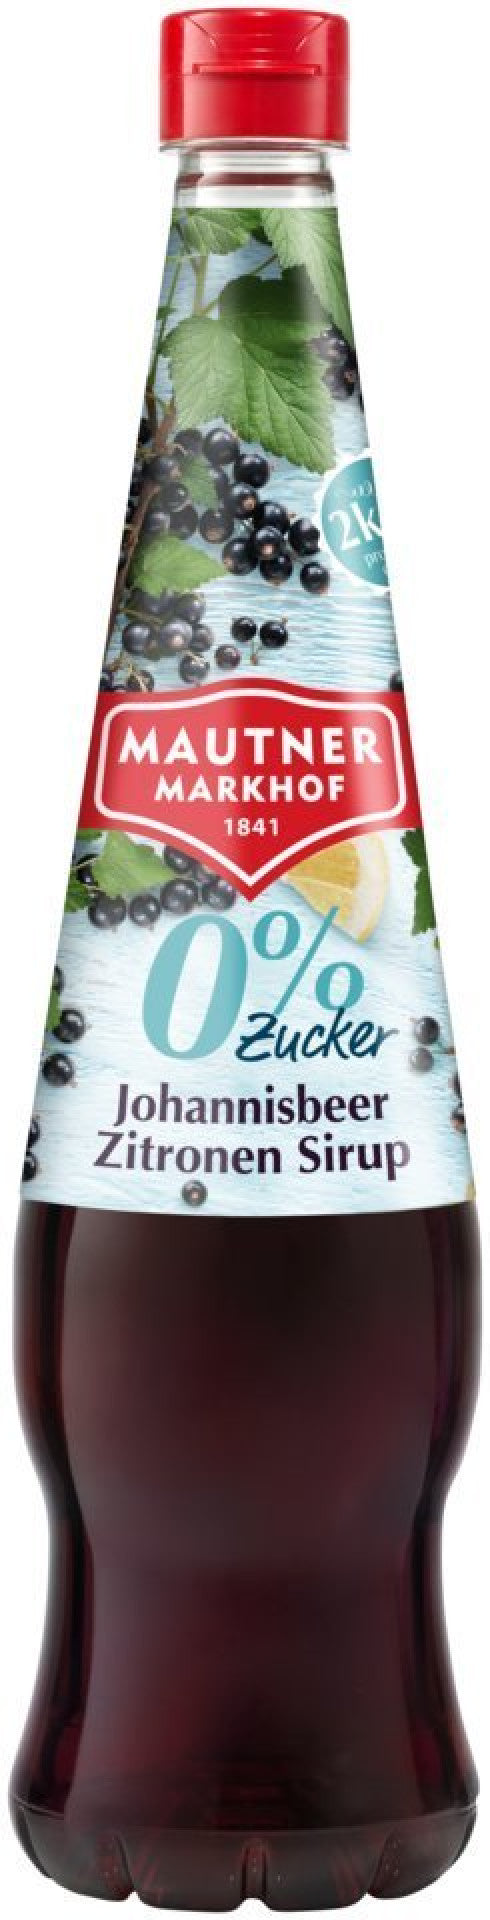 Mautner Markhof 0% Zucker Sirup Johannisbeere - Zitrone